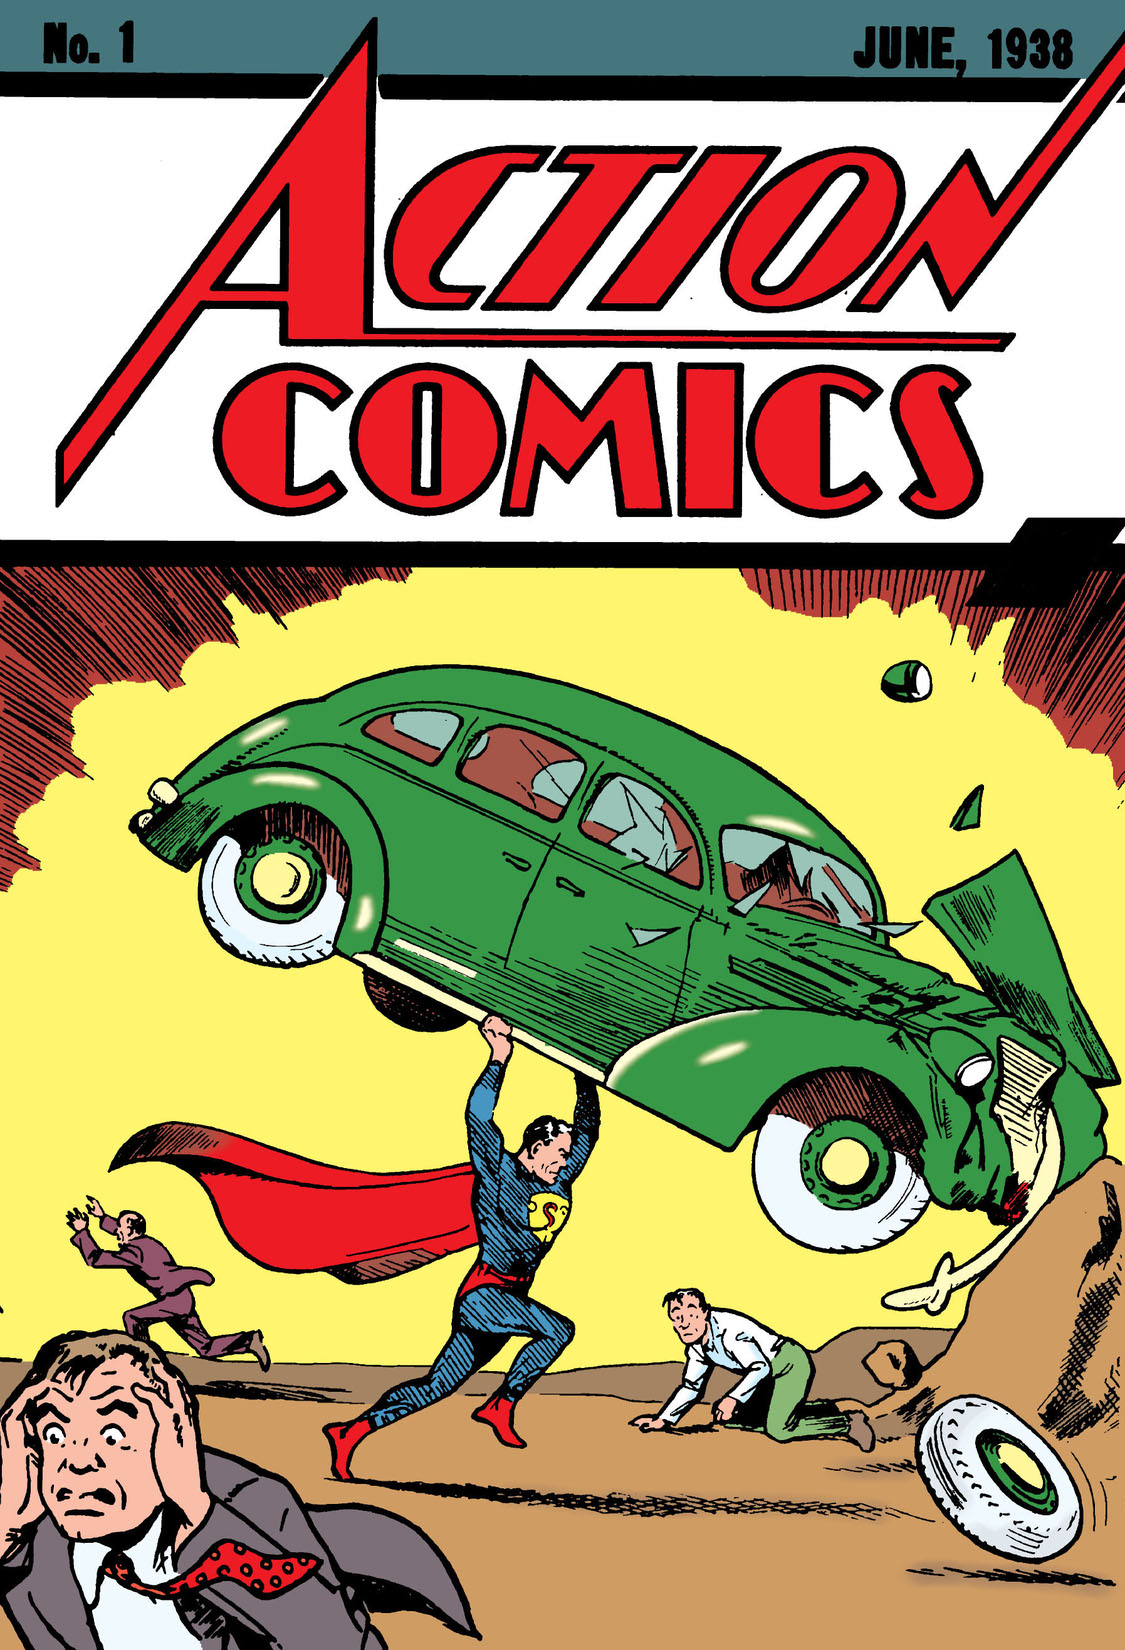 Action Comics (1938-) #1 preview images